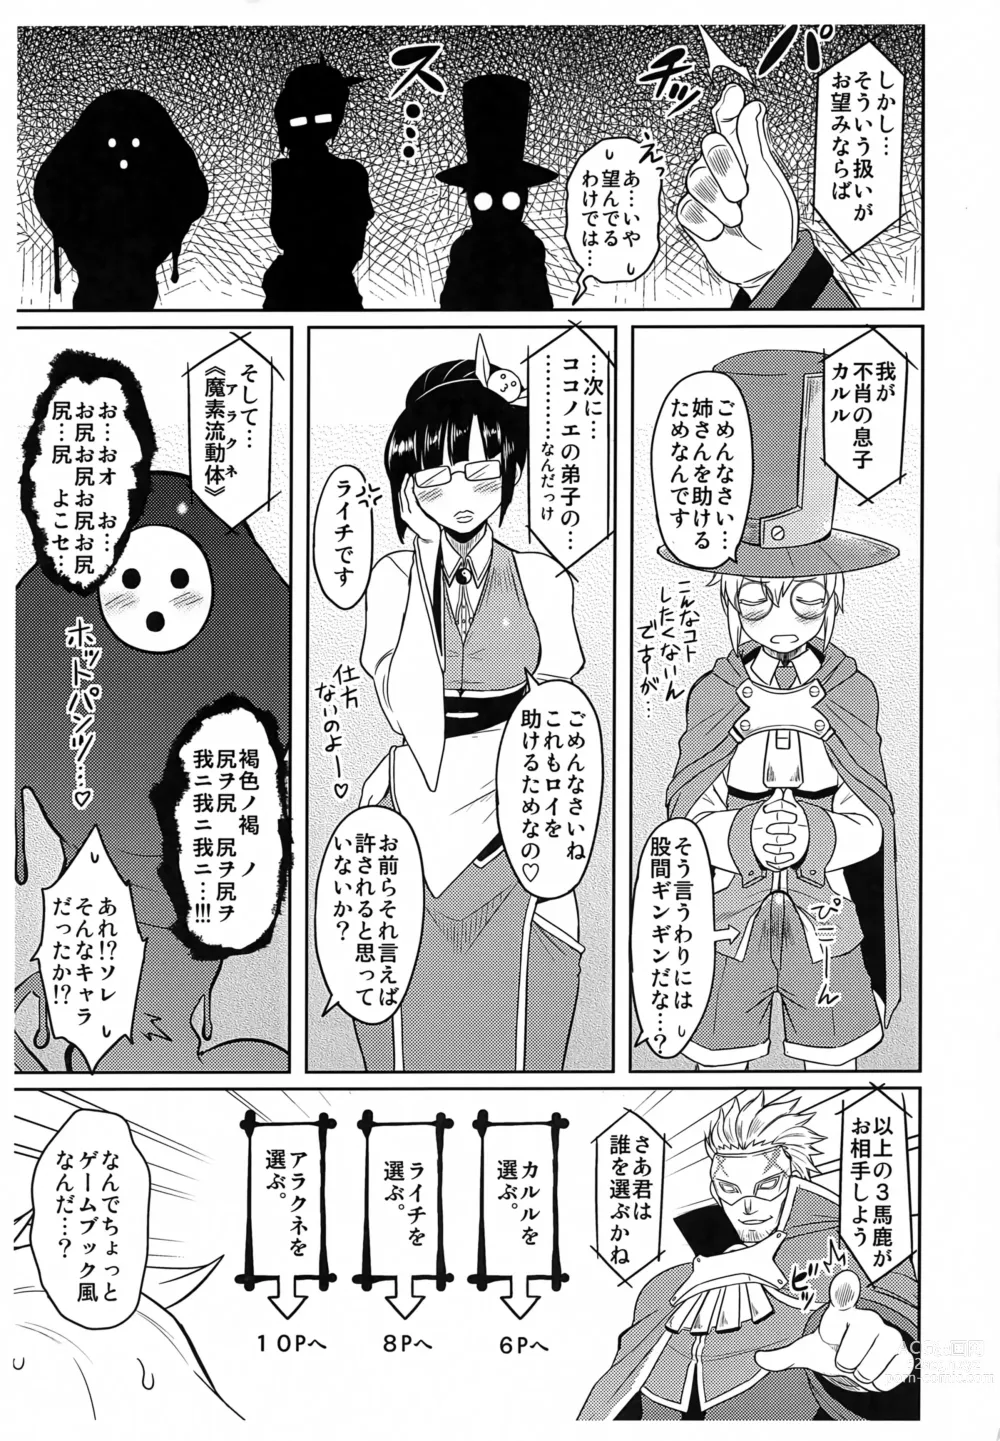 Page 5 of doujinshi Bullet-san o Ijimetai.